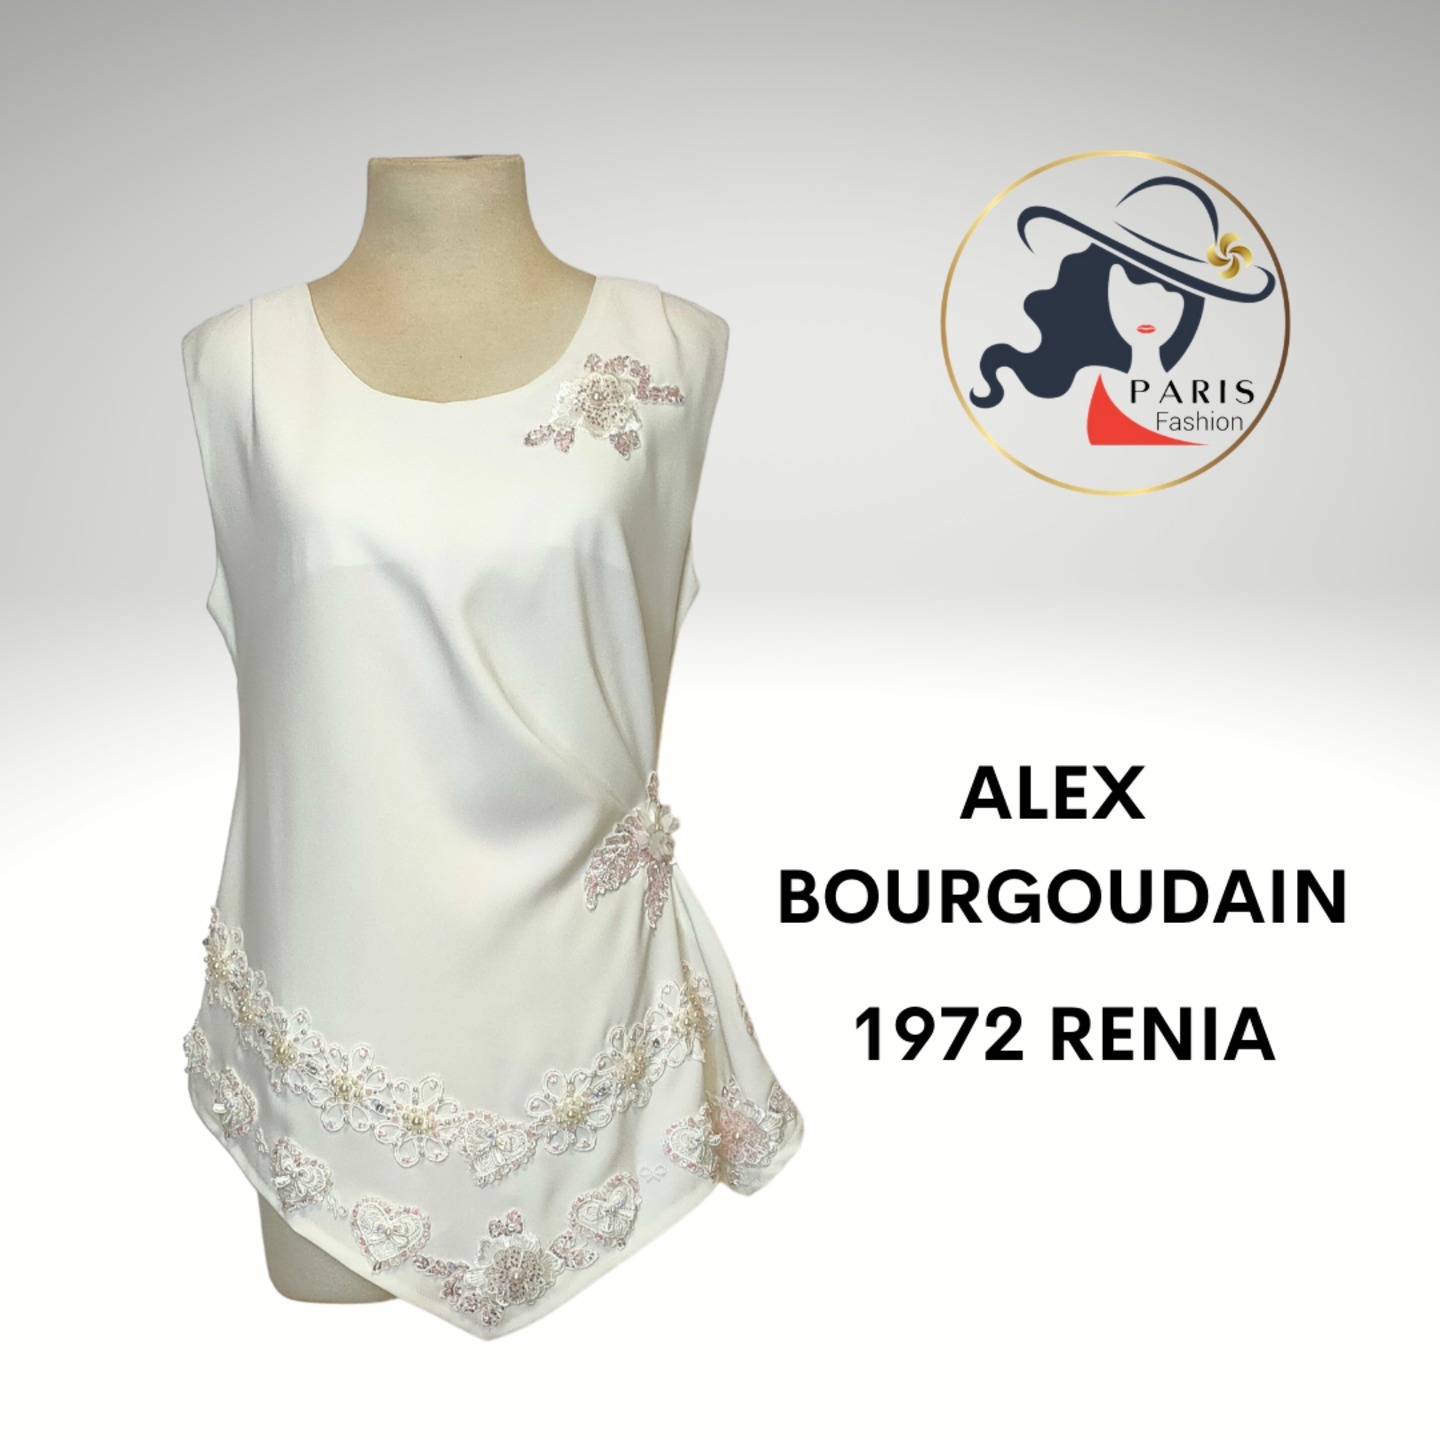 ALEX BOURGOUDAIN 1972 RENIA WHITE TOP WITH HANDSEWN SEQUINS